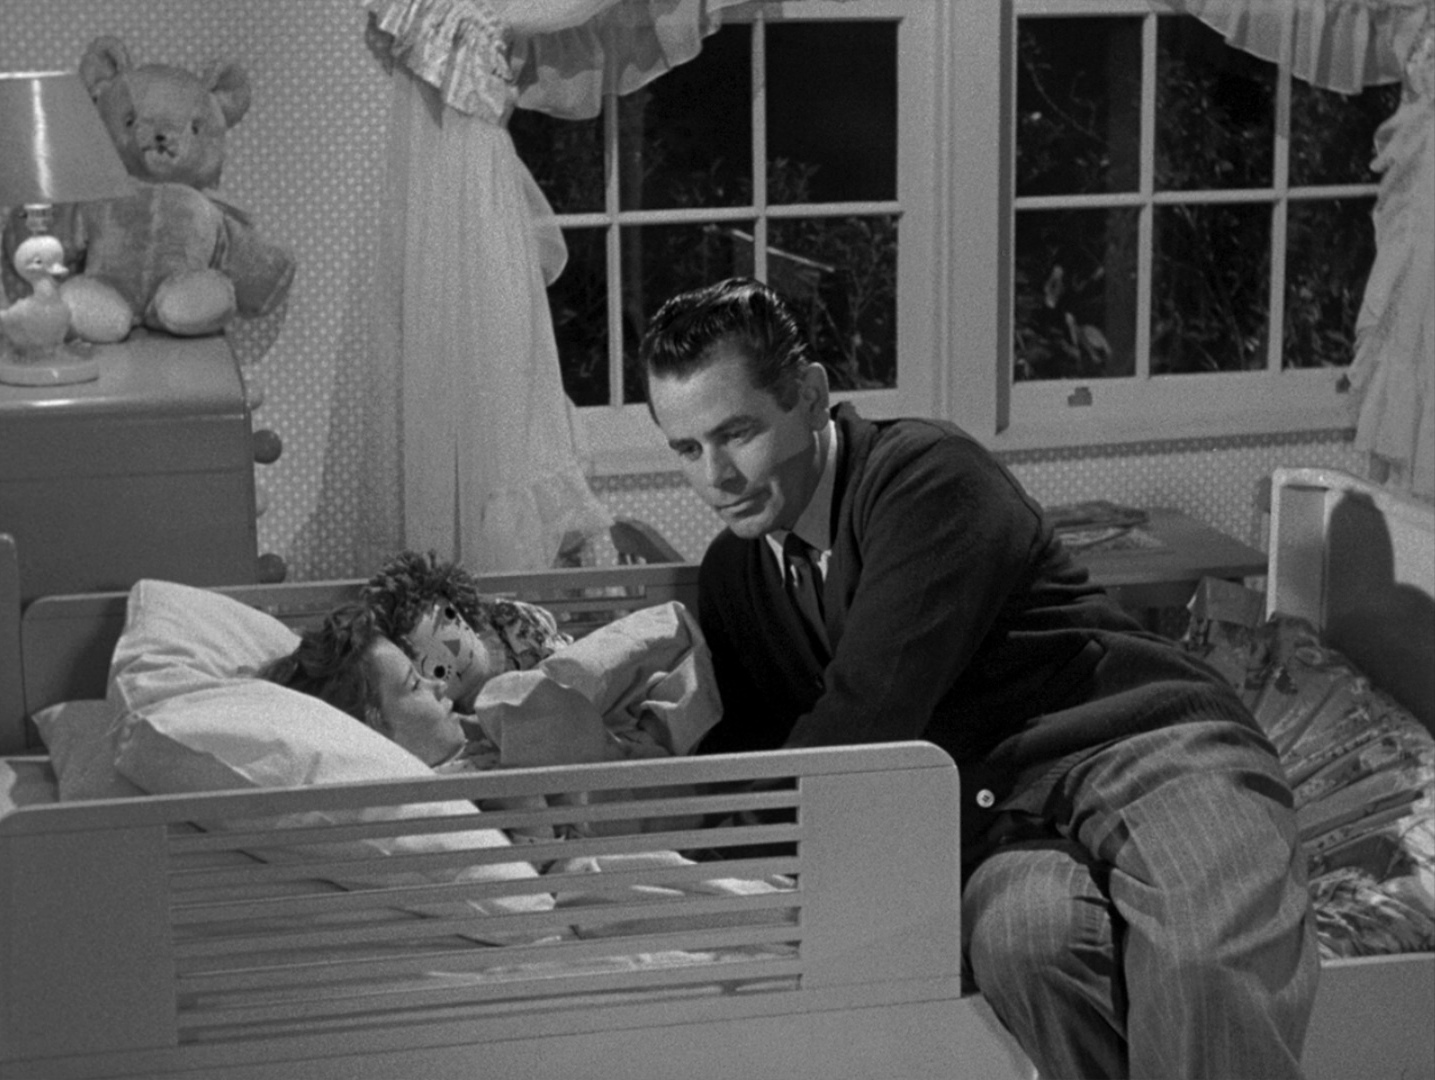 The Big Heat (1953)[Dvdrip][Big Dad E�]